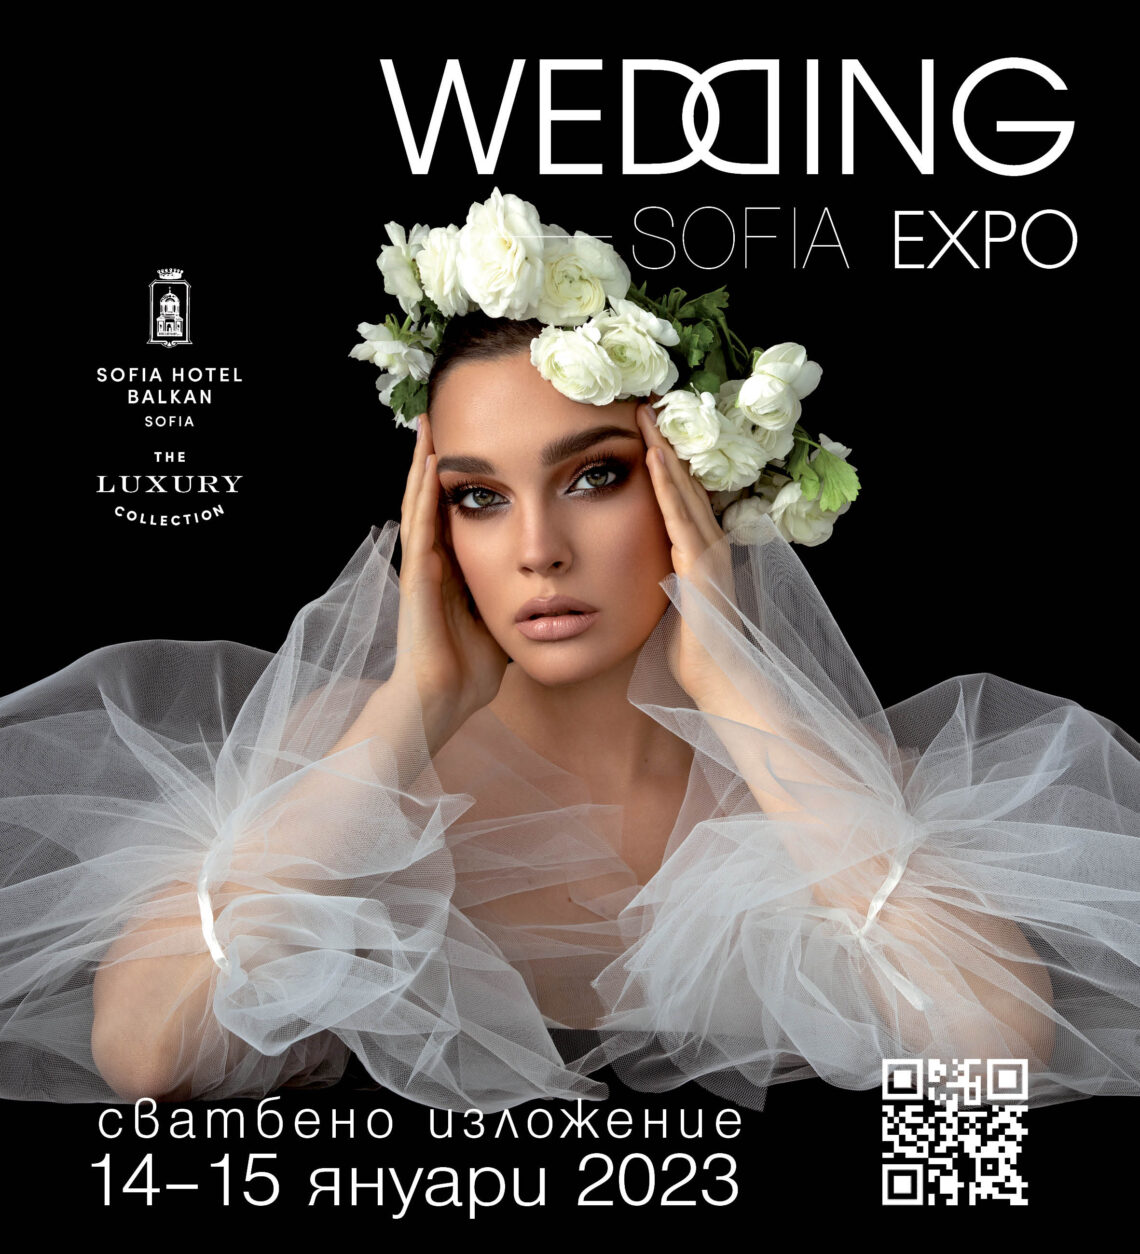 SOFIA WEDDING EXPO